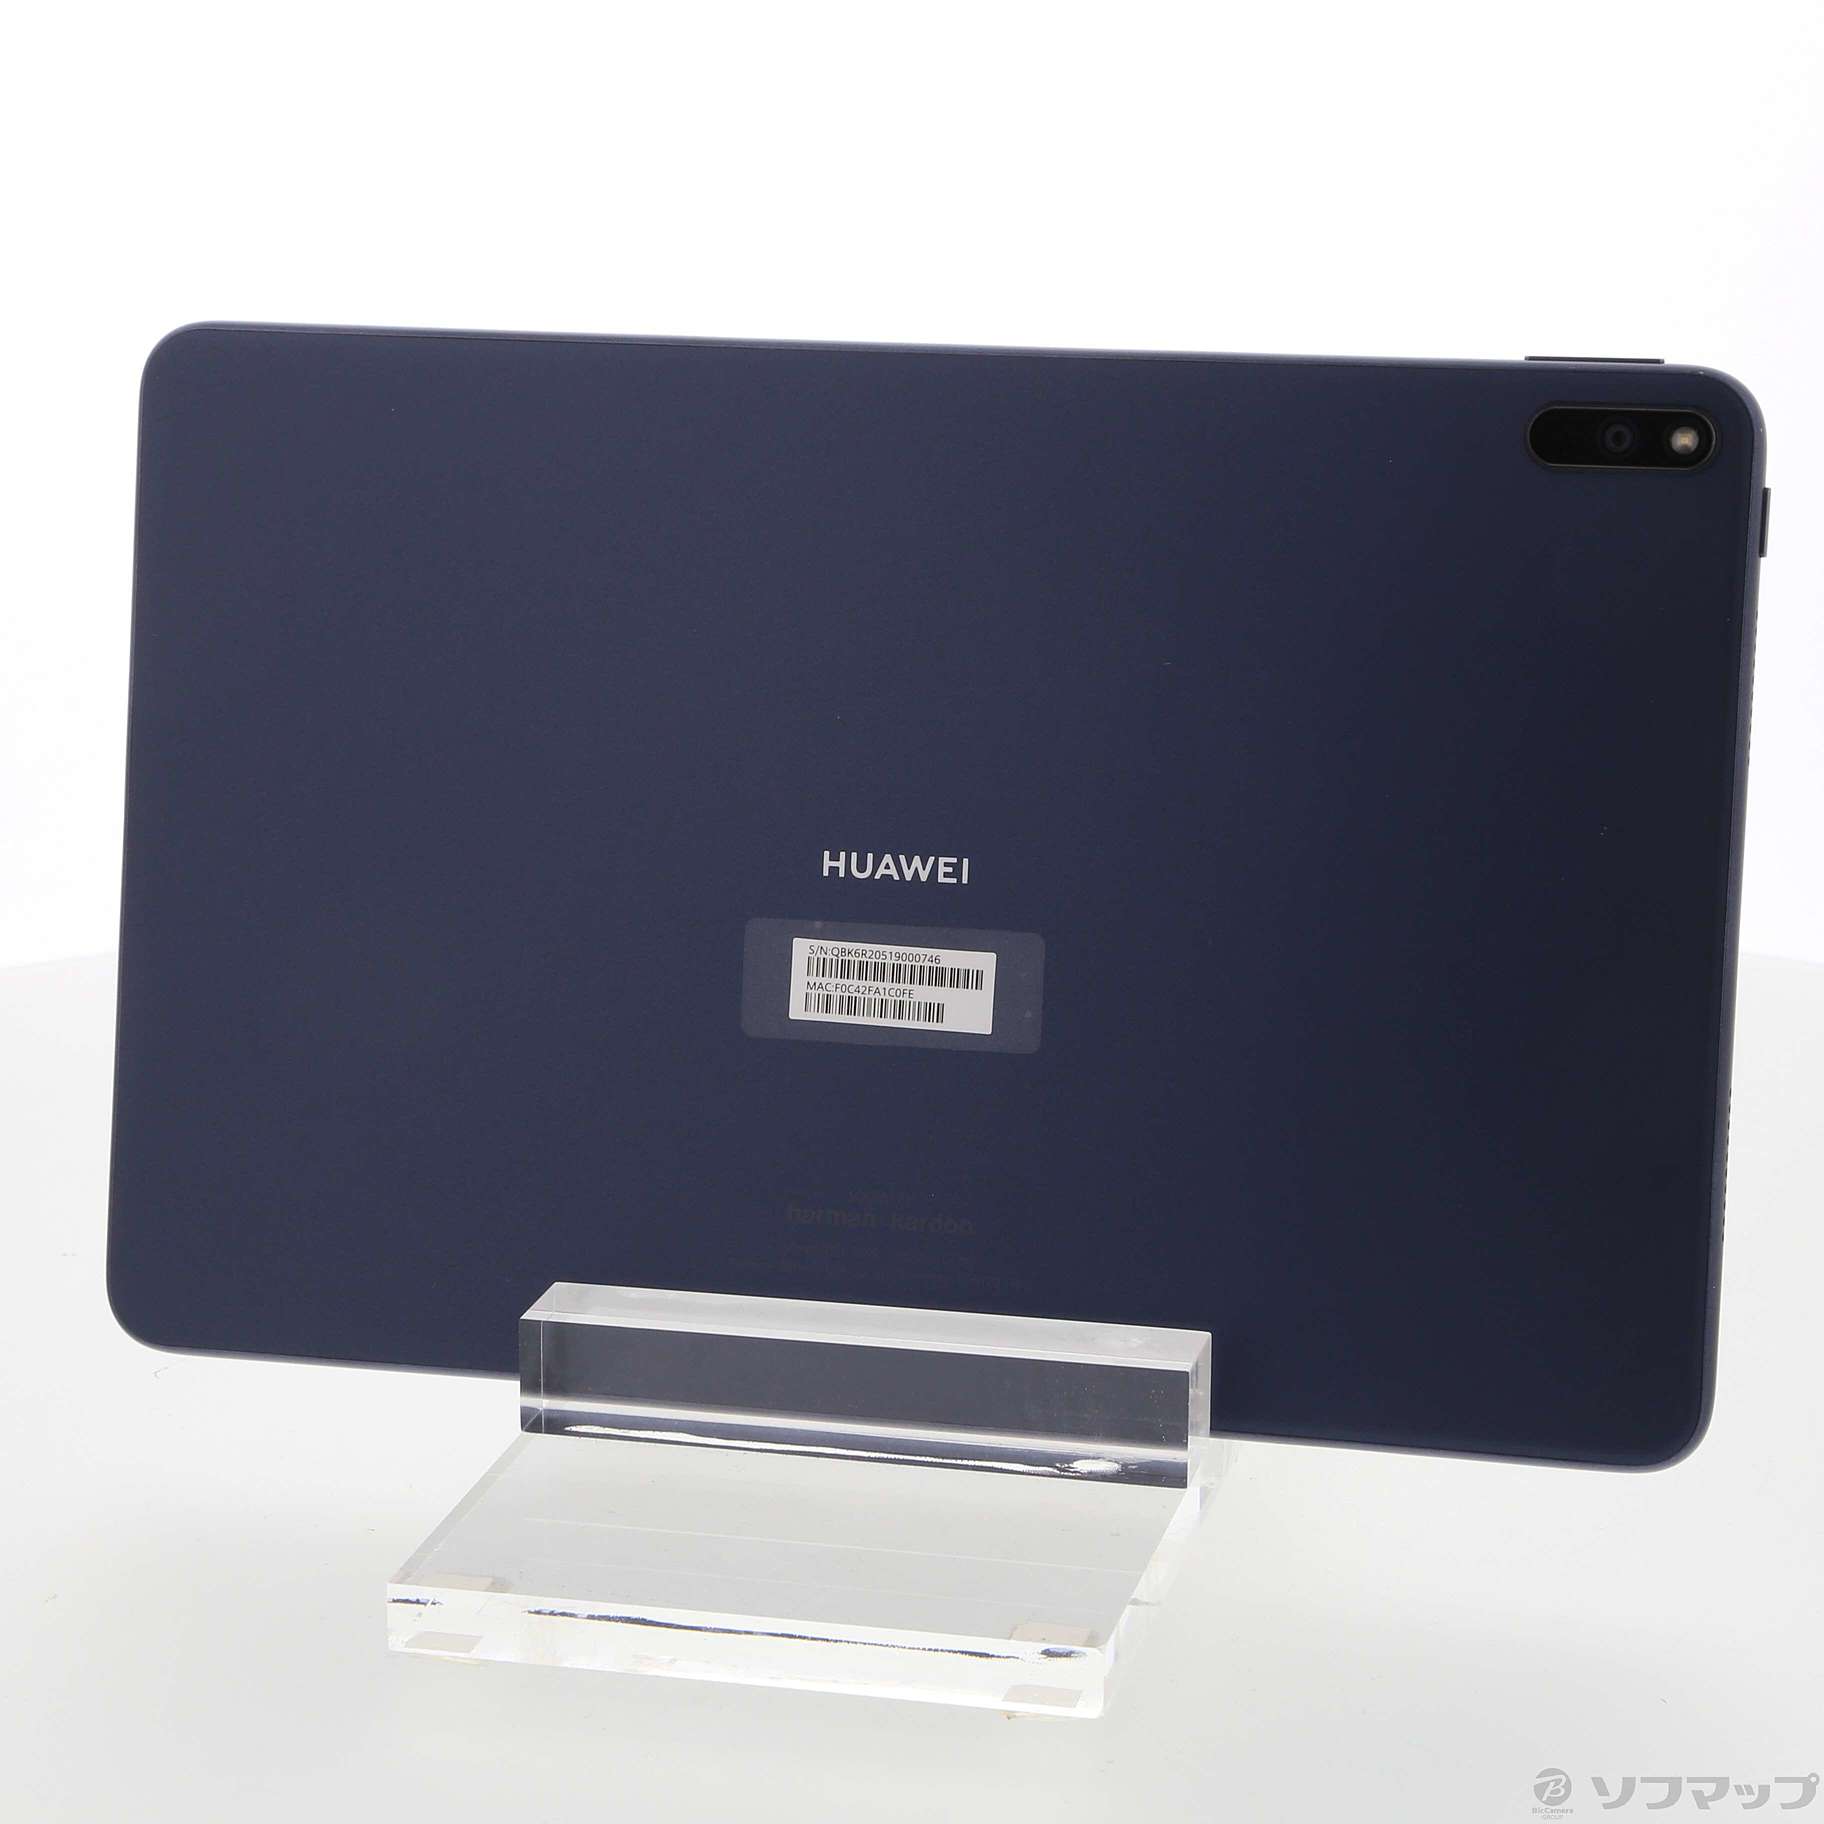 NEW即納Huawei MatePad Pro ミッドナイトグレー 128GB Androidタブレット本体